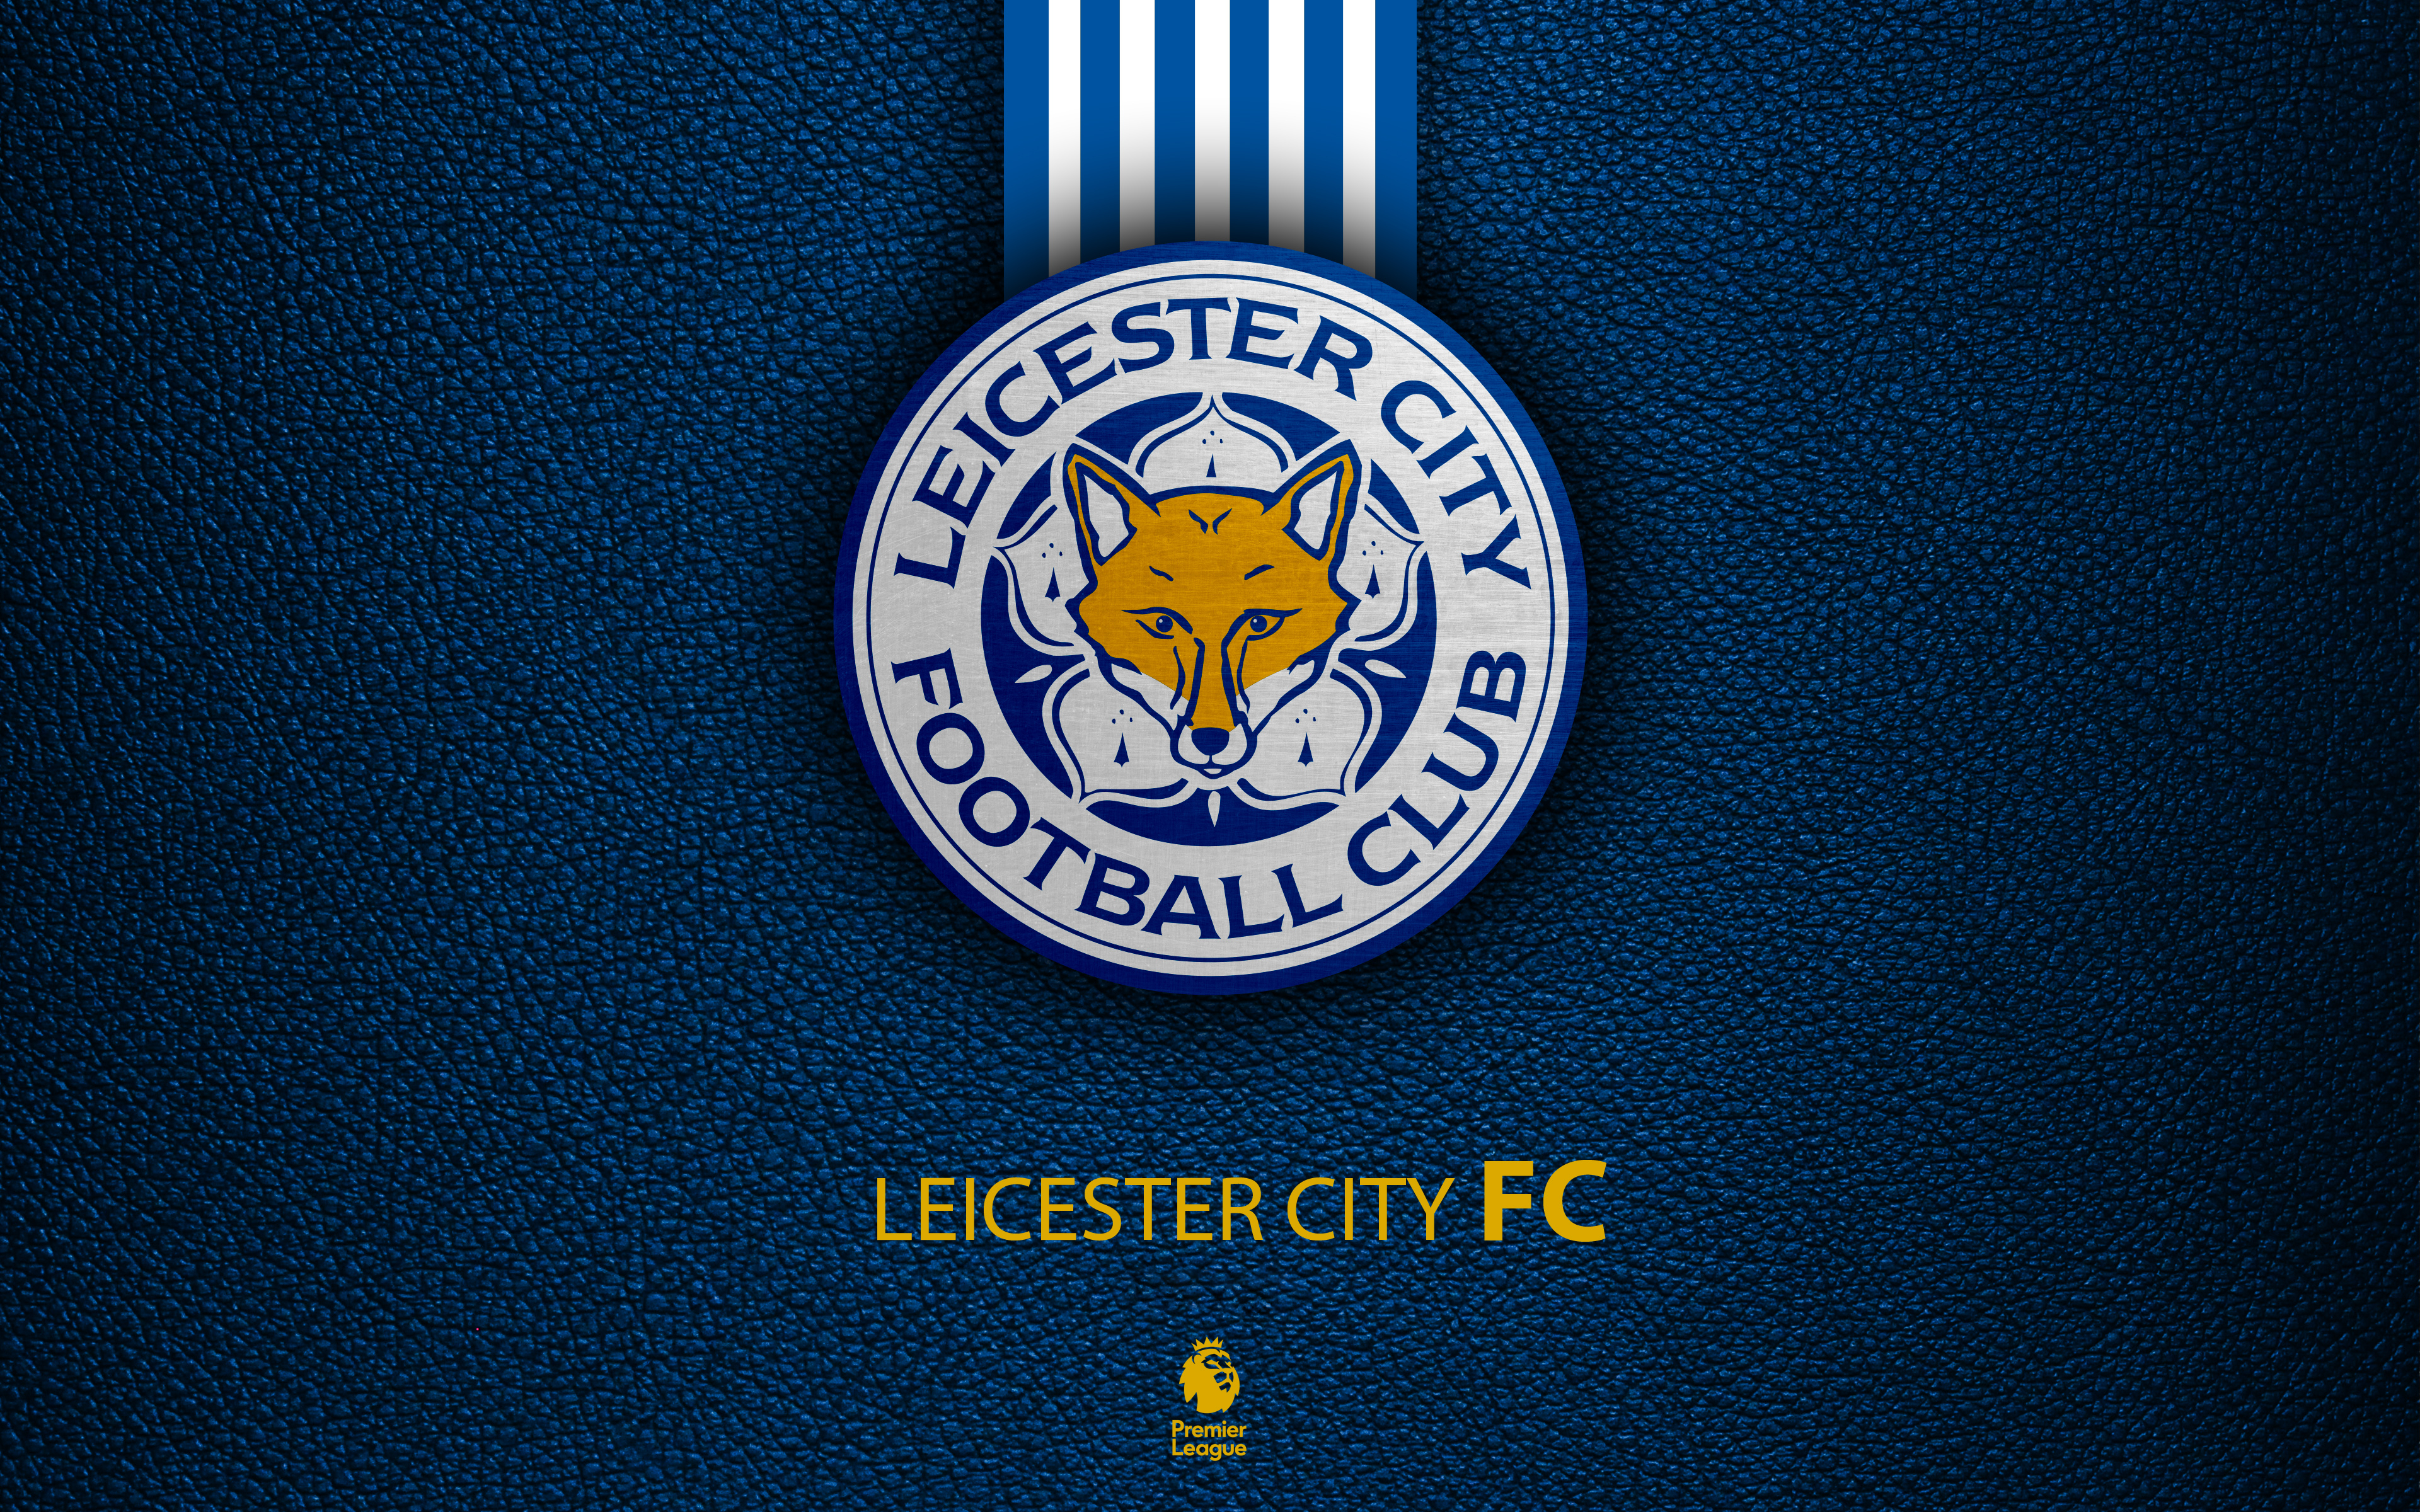 leicester city f c, sports, emblem, logo, soccer